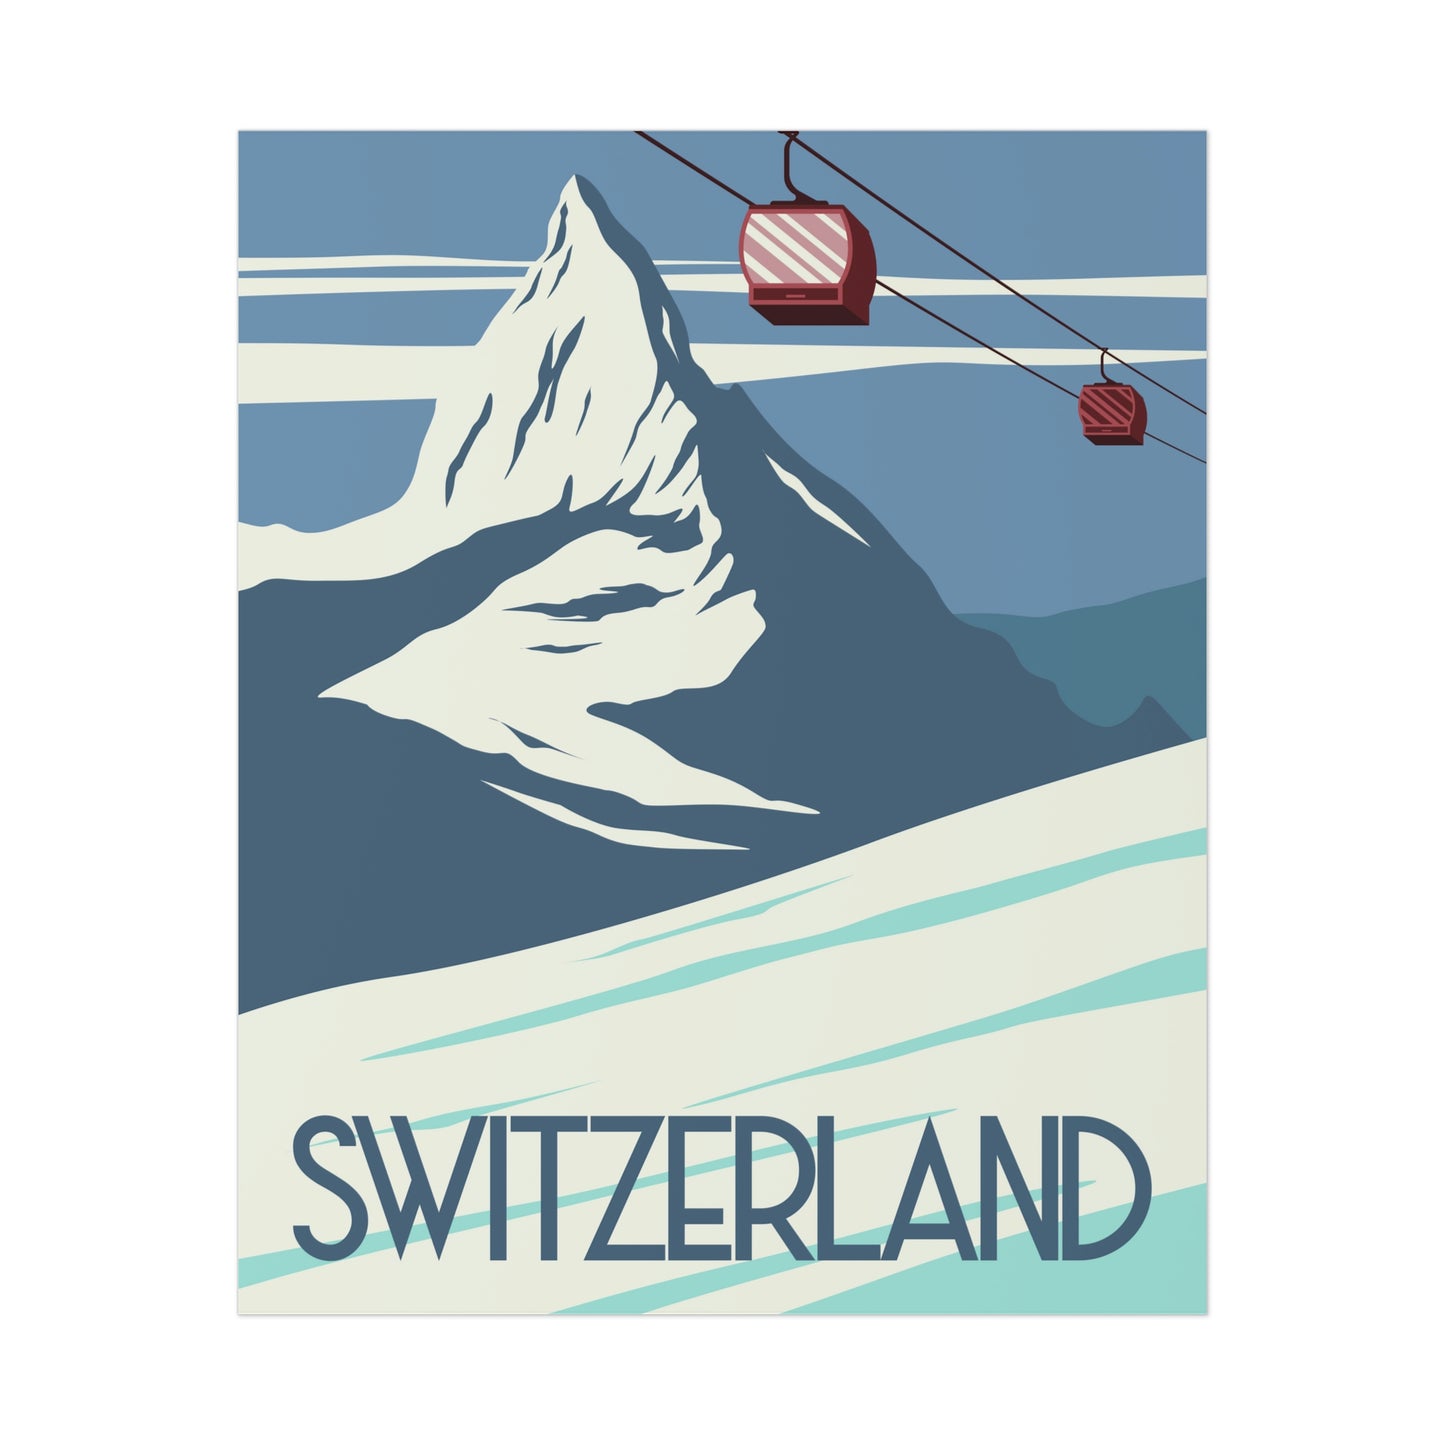 Vintage Ski Poster, Switzerland Matterhorn Mountain Gondola Retro Print Wall Art Vertical Travel Artwork Small Large Decor Uncoated Paper Starcove Fashion